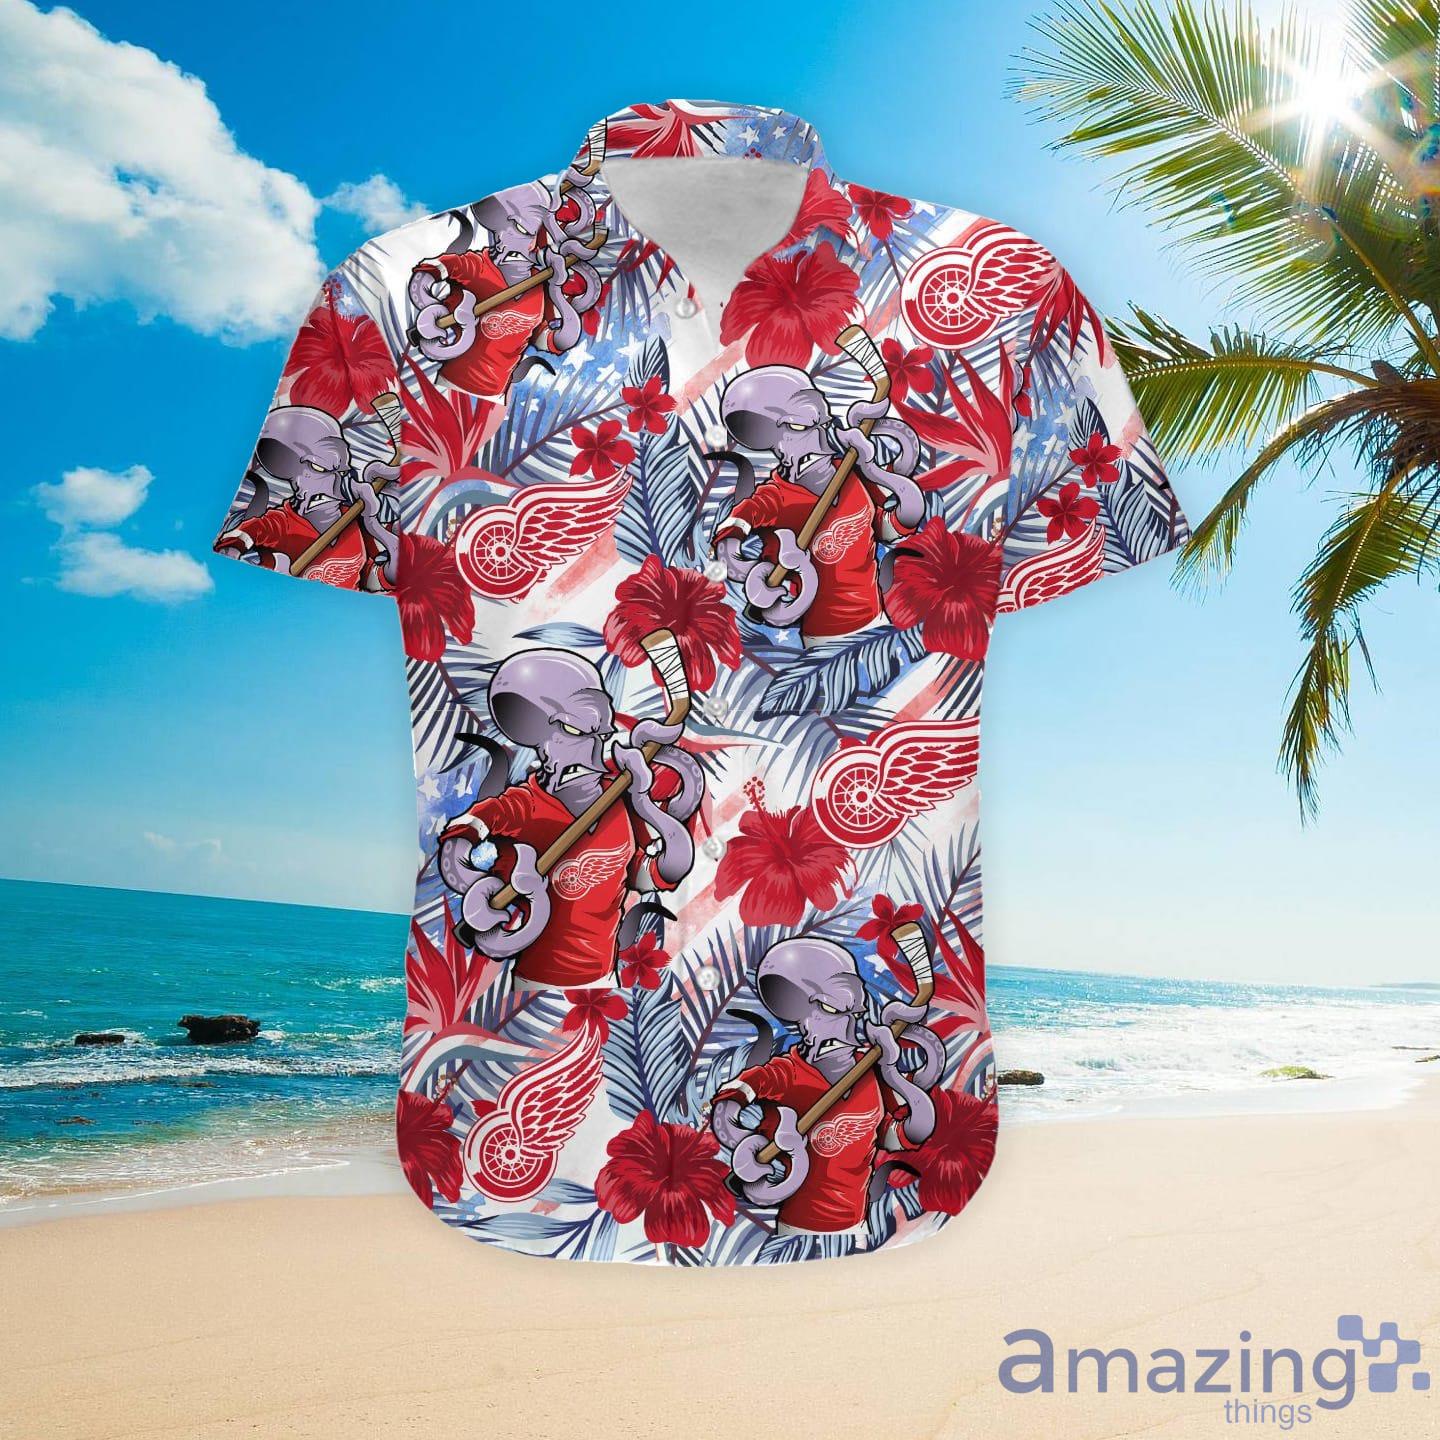 Detroit Red Wings Hawaiian Aloha Shirt Hawaiian Shirt And Short